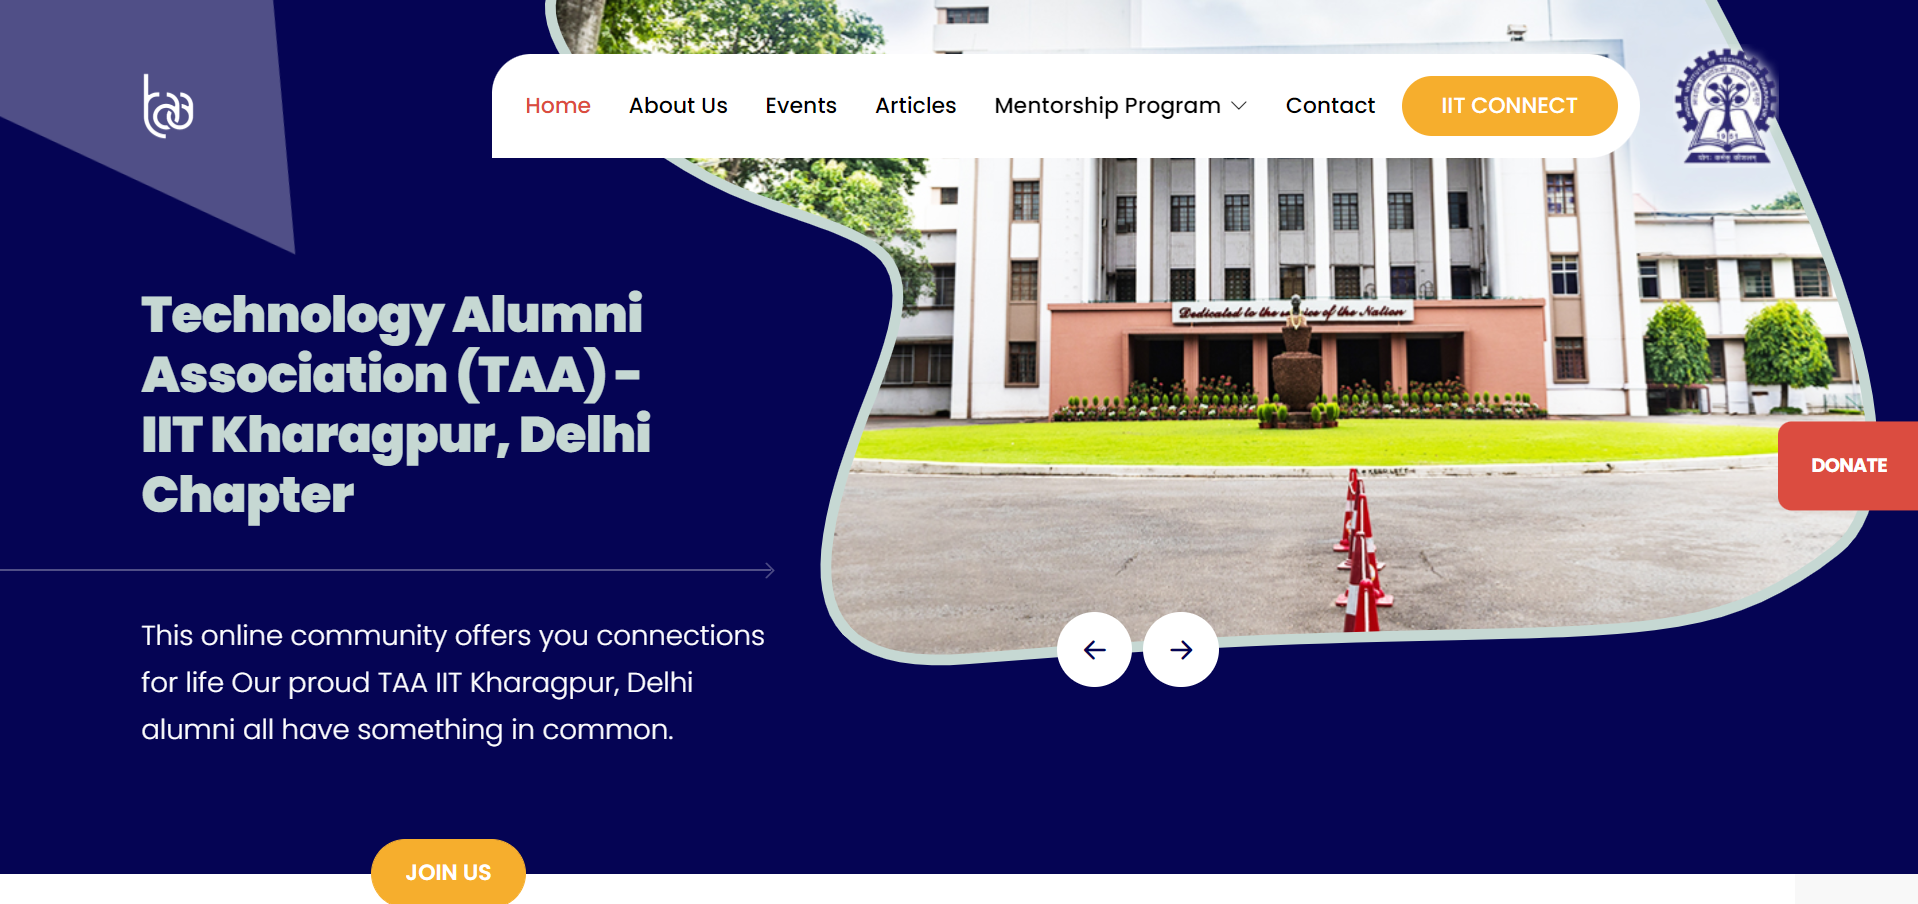 Technology Alumni Association(TAA) - IIT Kharagpur Delhi Chapter